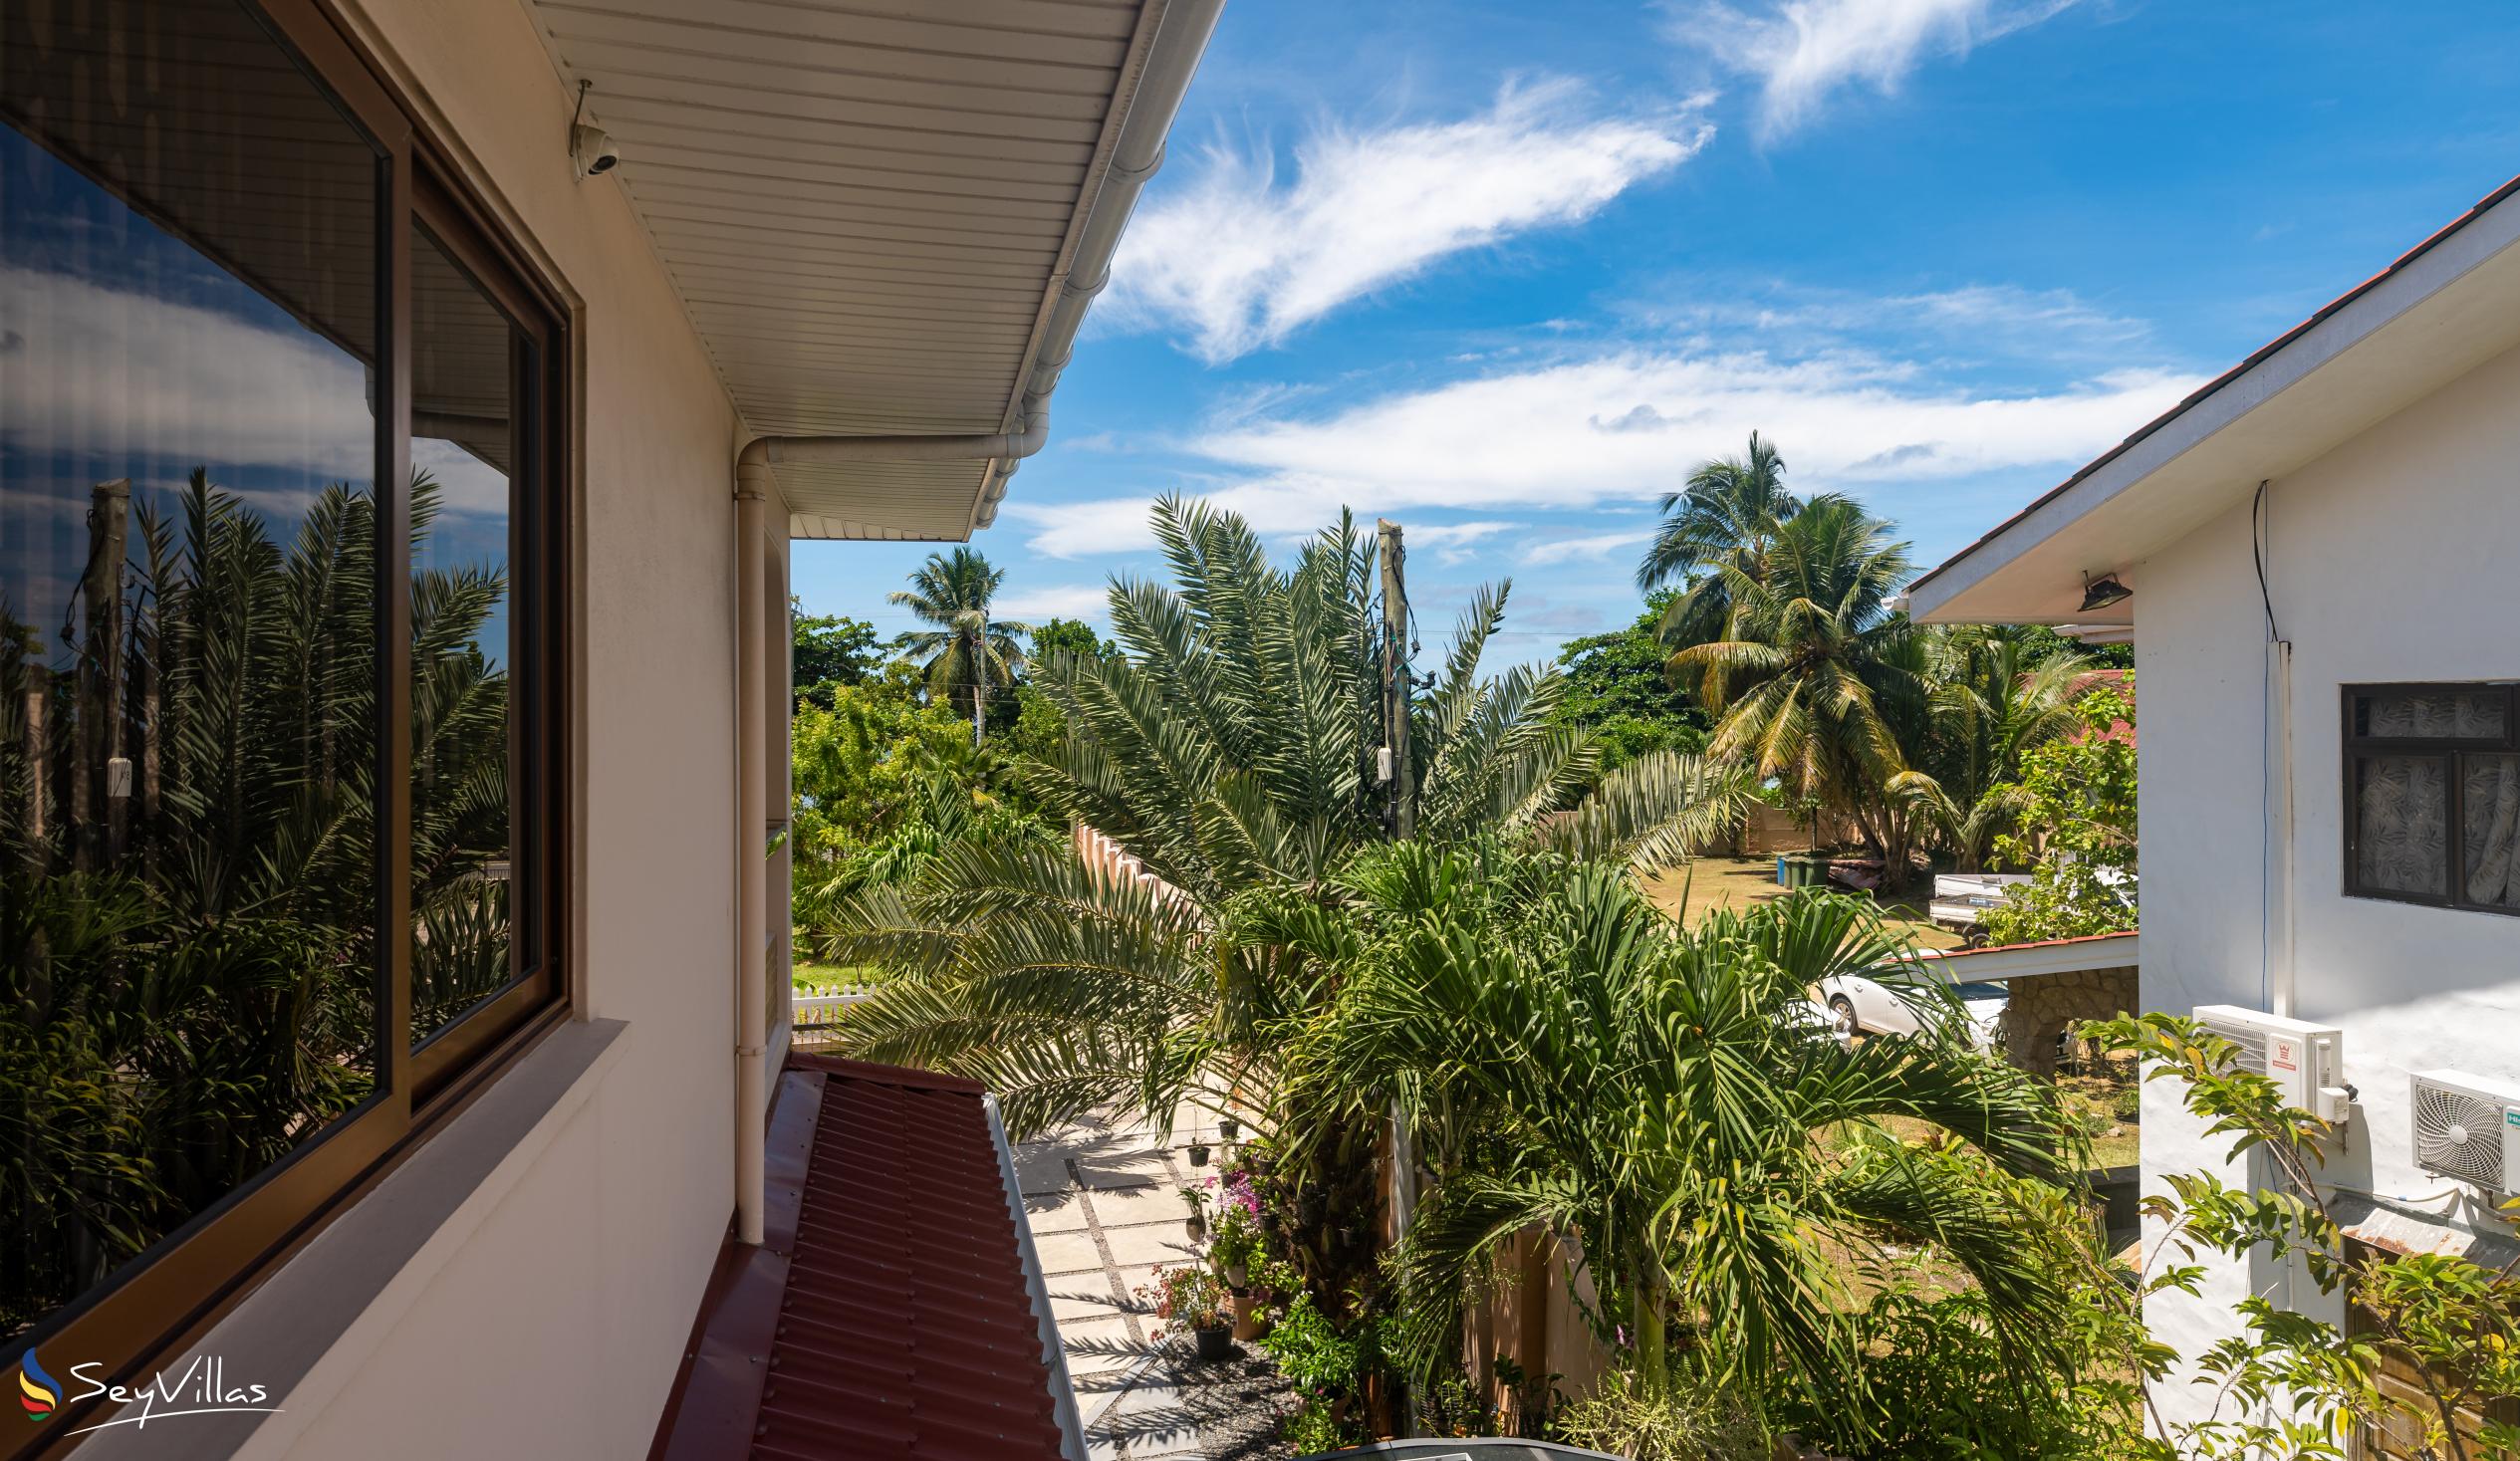 Foto 5: Erica's Residence Self Catering Apartment - Aussenbereich - Mahé (Seychellen)